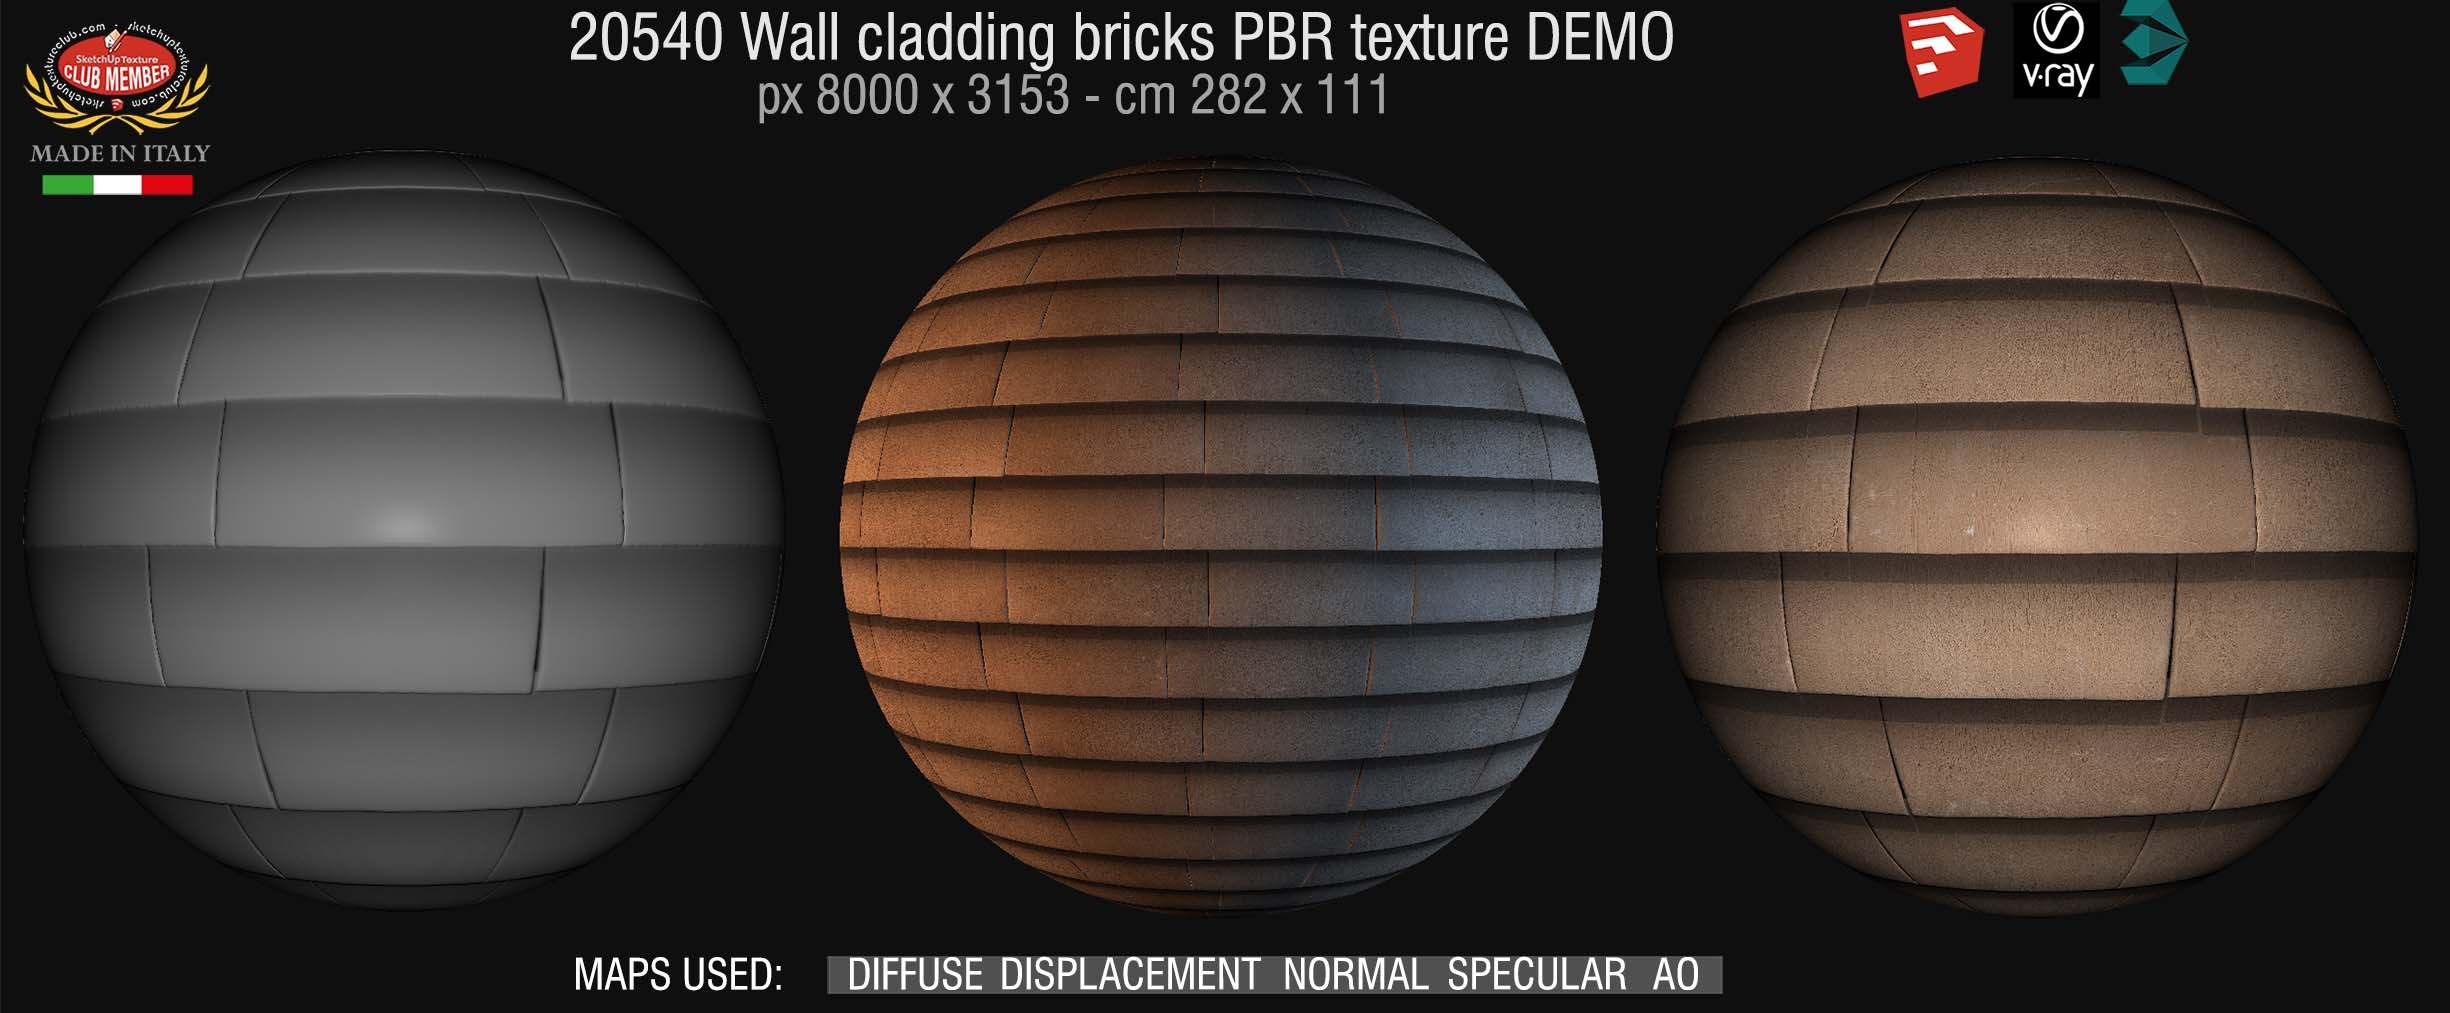 21540 Wall cladding bricks PBR texture seamless DEMO